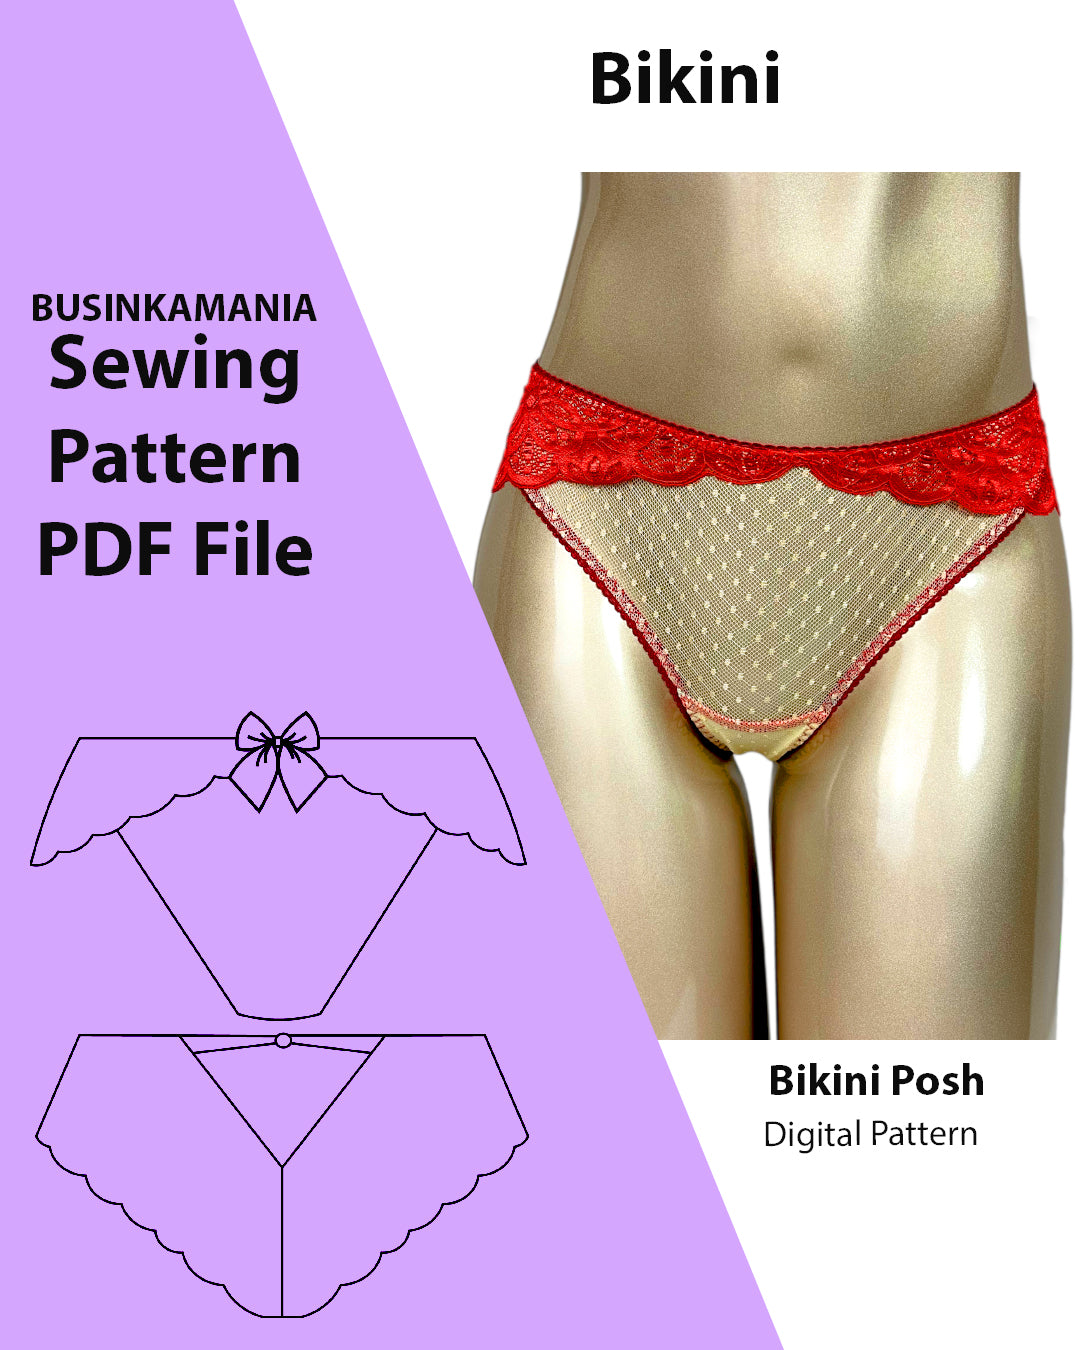 Comfort Thong Bikini Bottom Sewing Pattern You Tube Video Tutorial